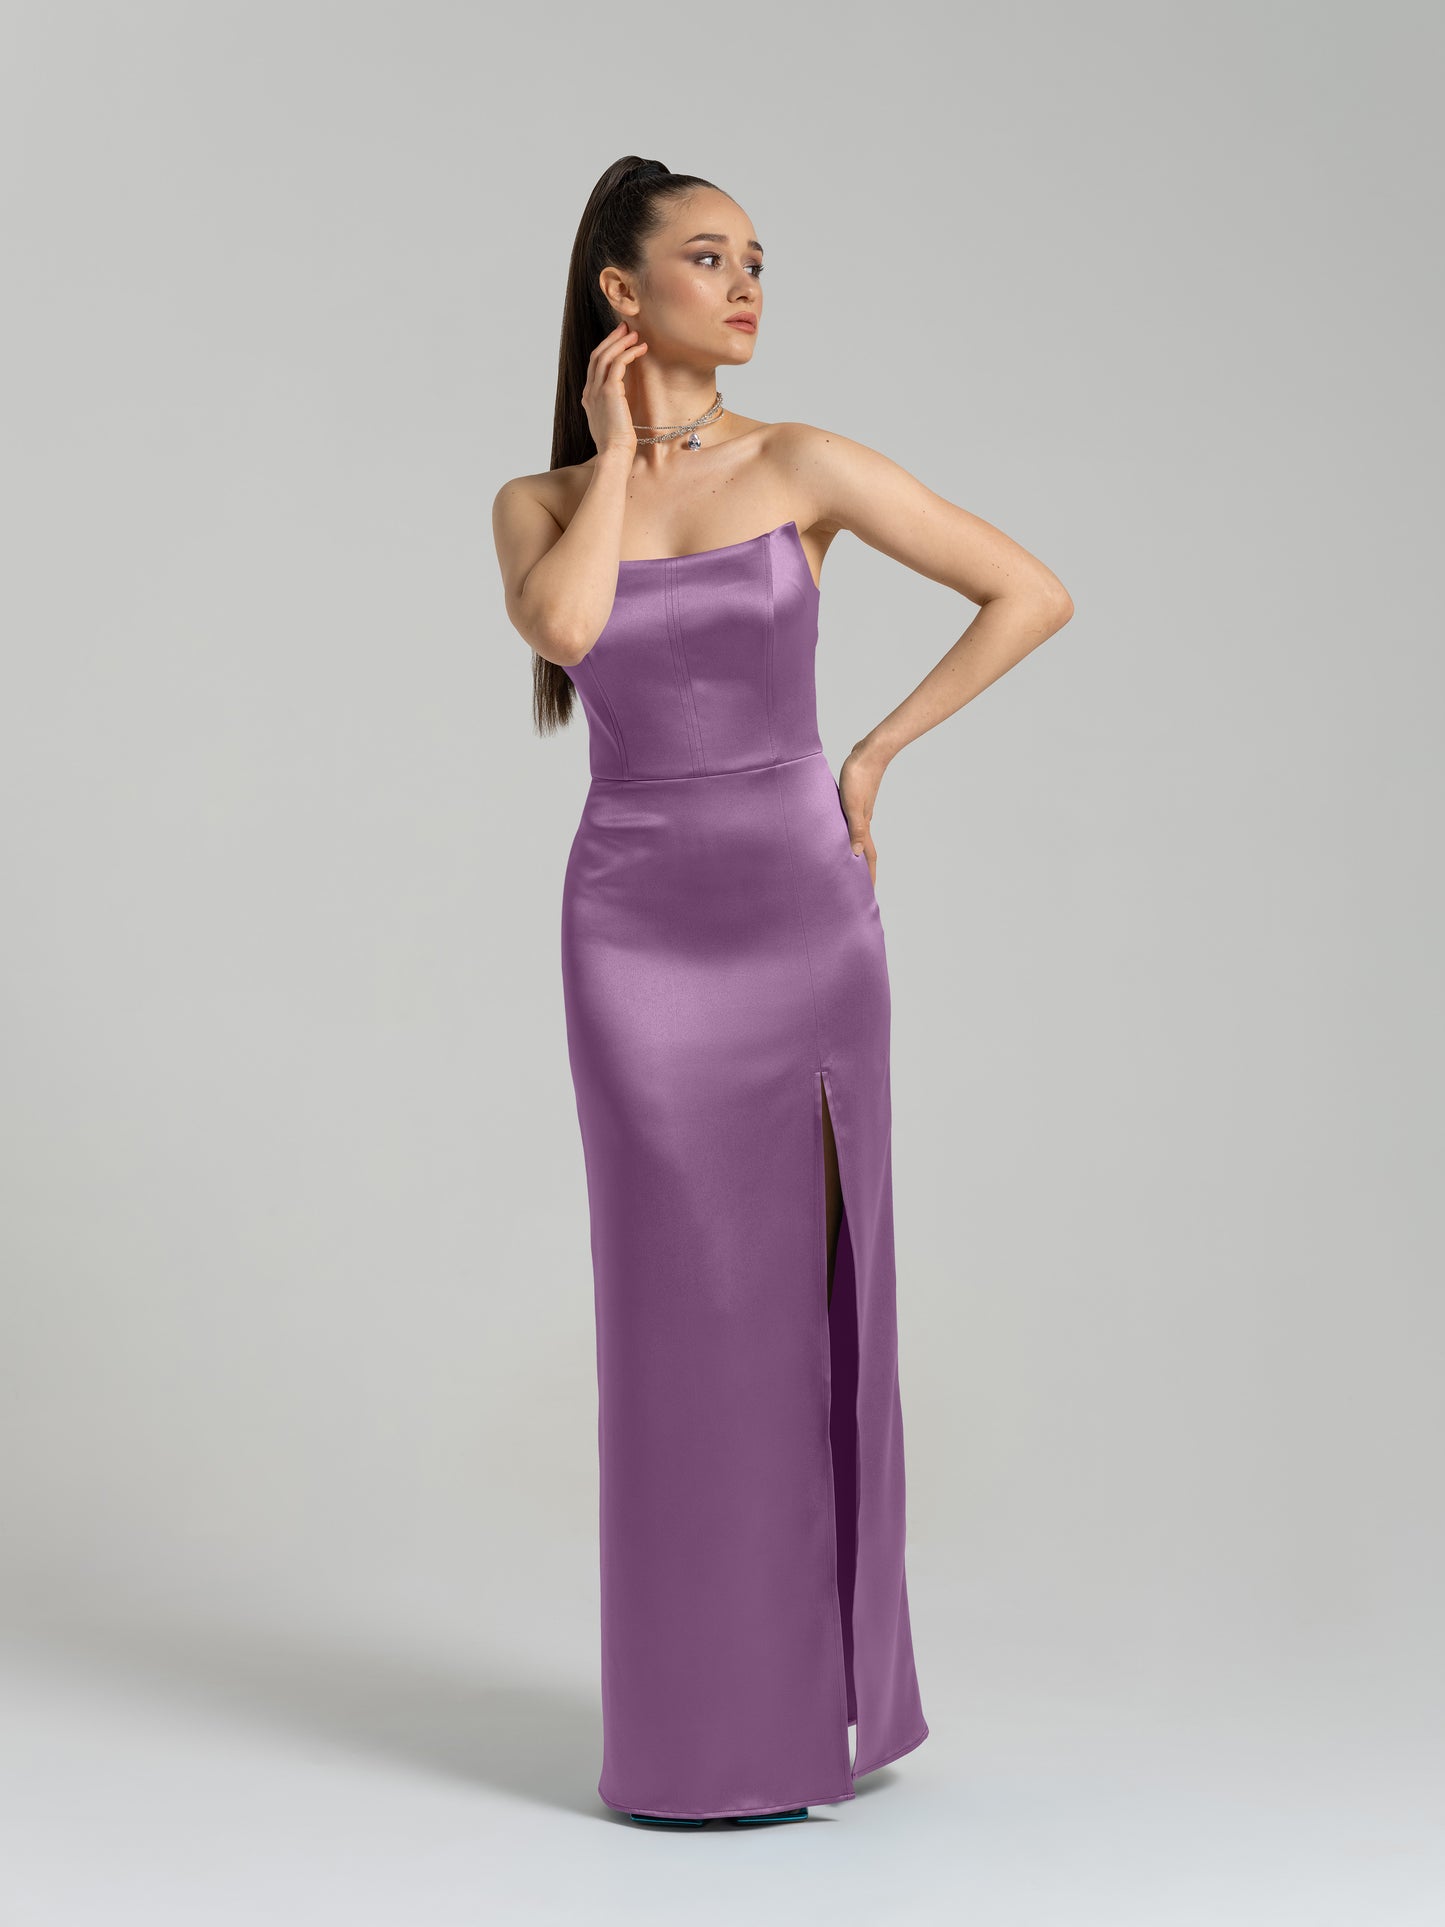 Queen of Hearts Satin Maxi Dress - Posh Purple